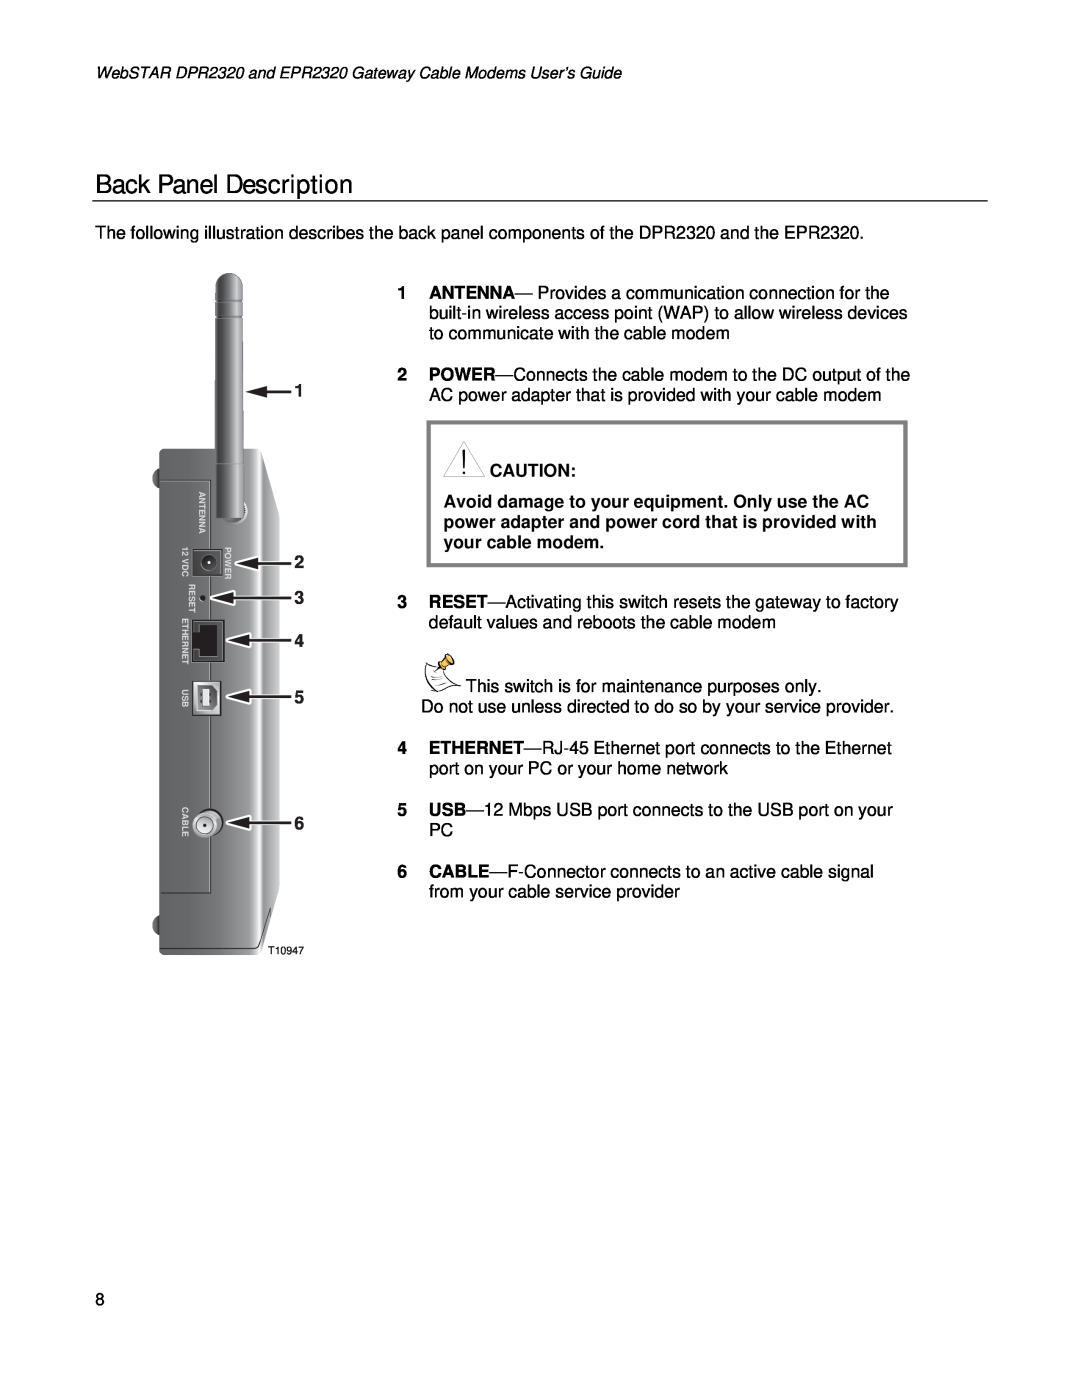 Apple DPR2320TM, EPR2320TM manual Back Panel Description 